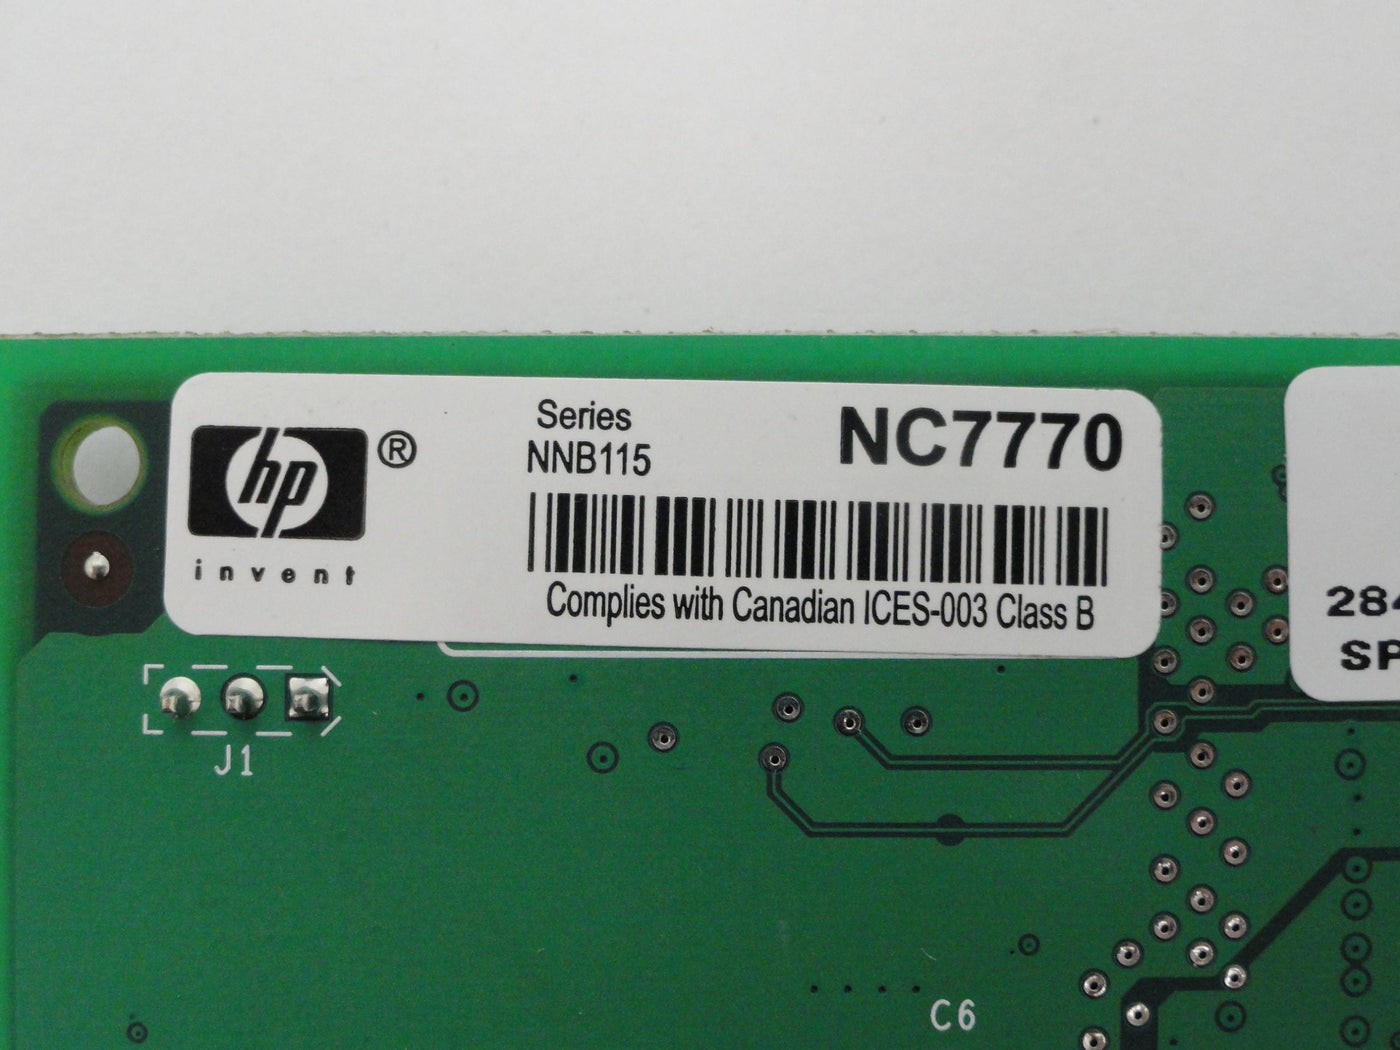 03-0320-000 - 3Com HP PCI-133 Ethernet NIC - Refurbished